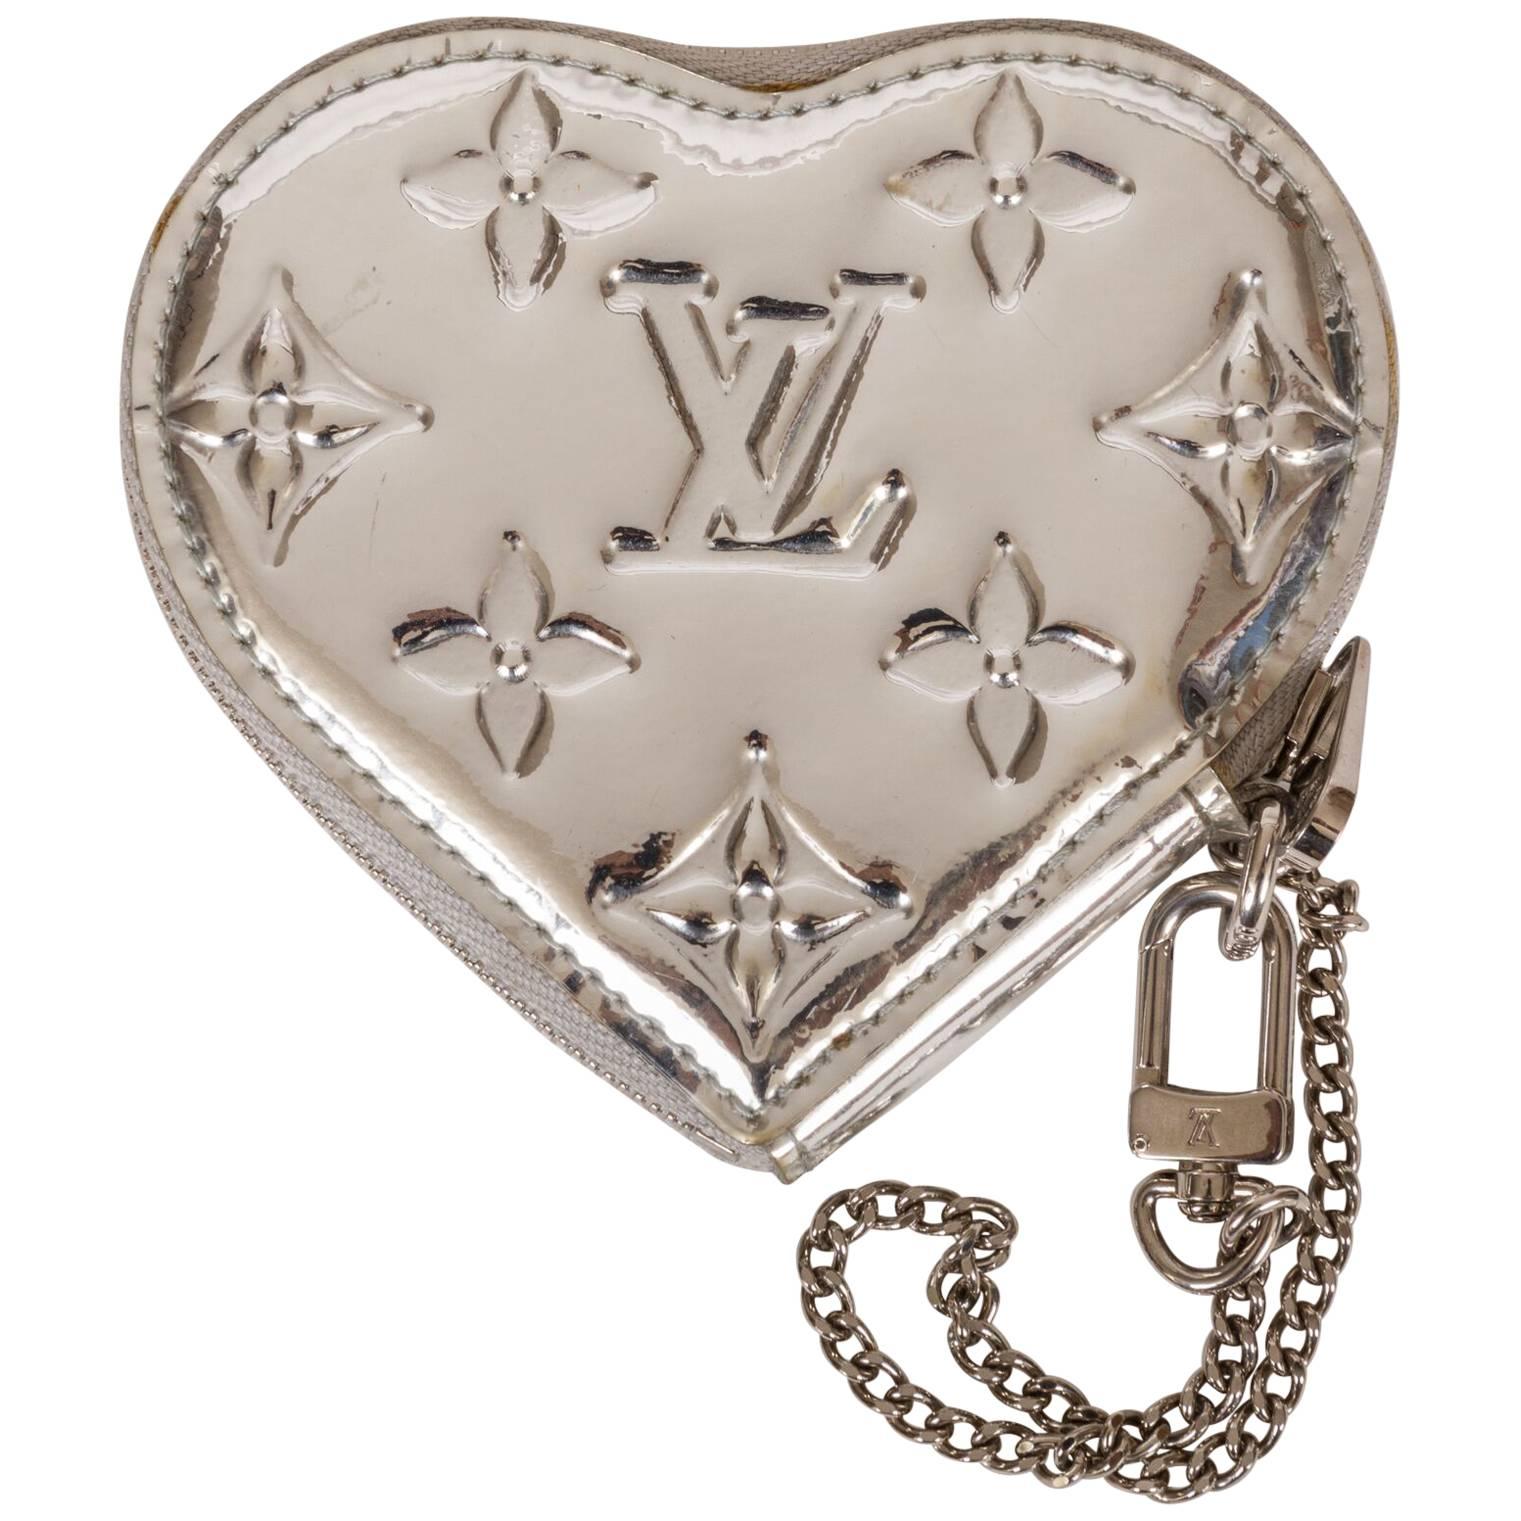 Vuitton Limited Edition Mirror Coin Case